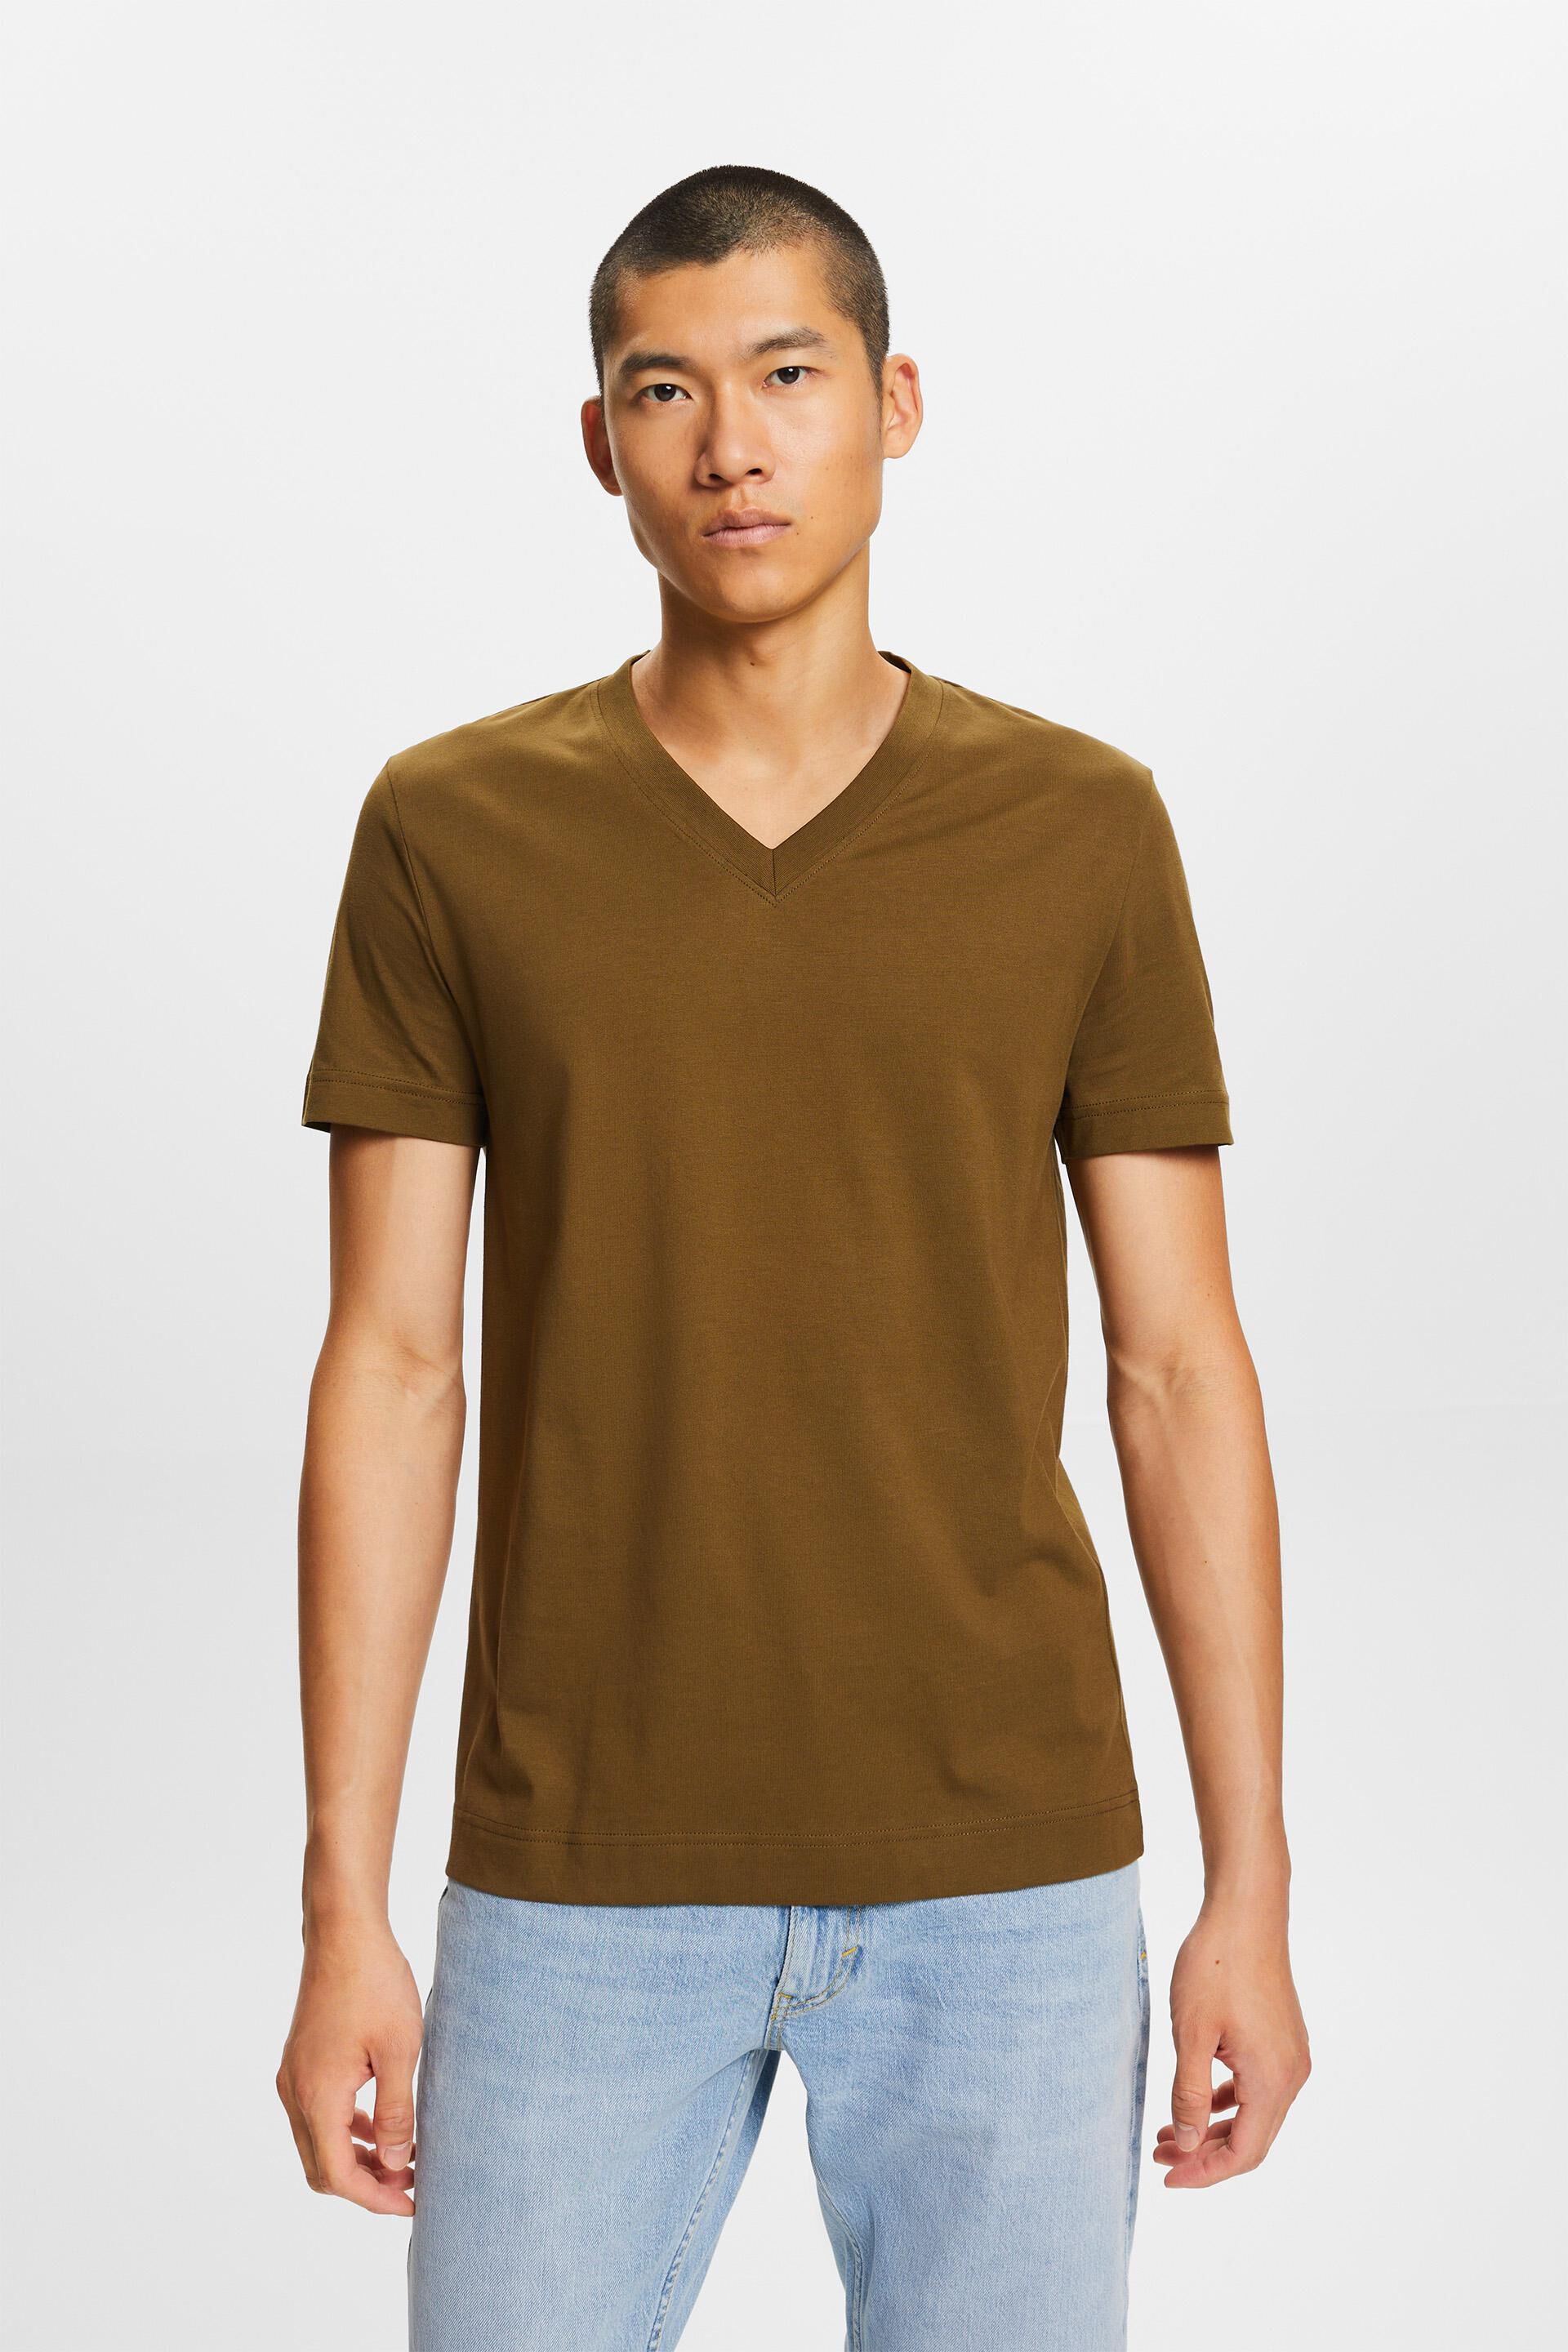 Esprit Jersey t-shirt, cotton 100% V-neck